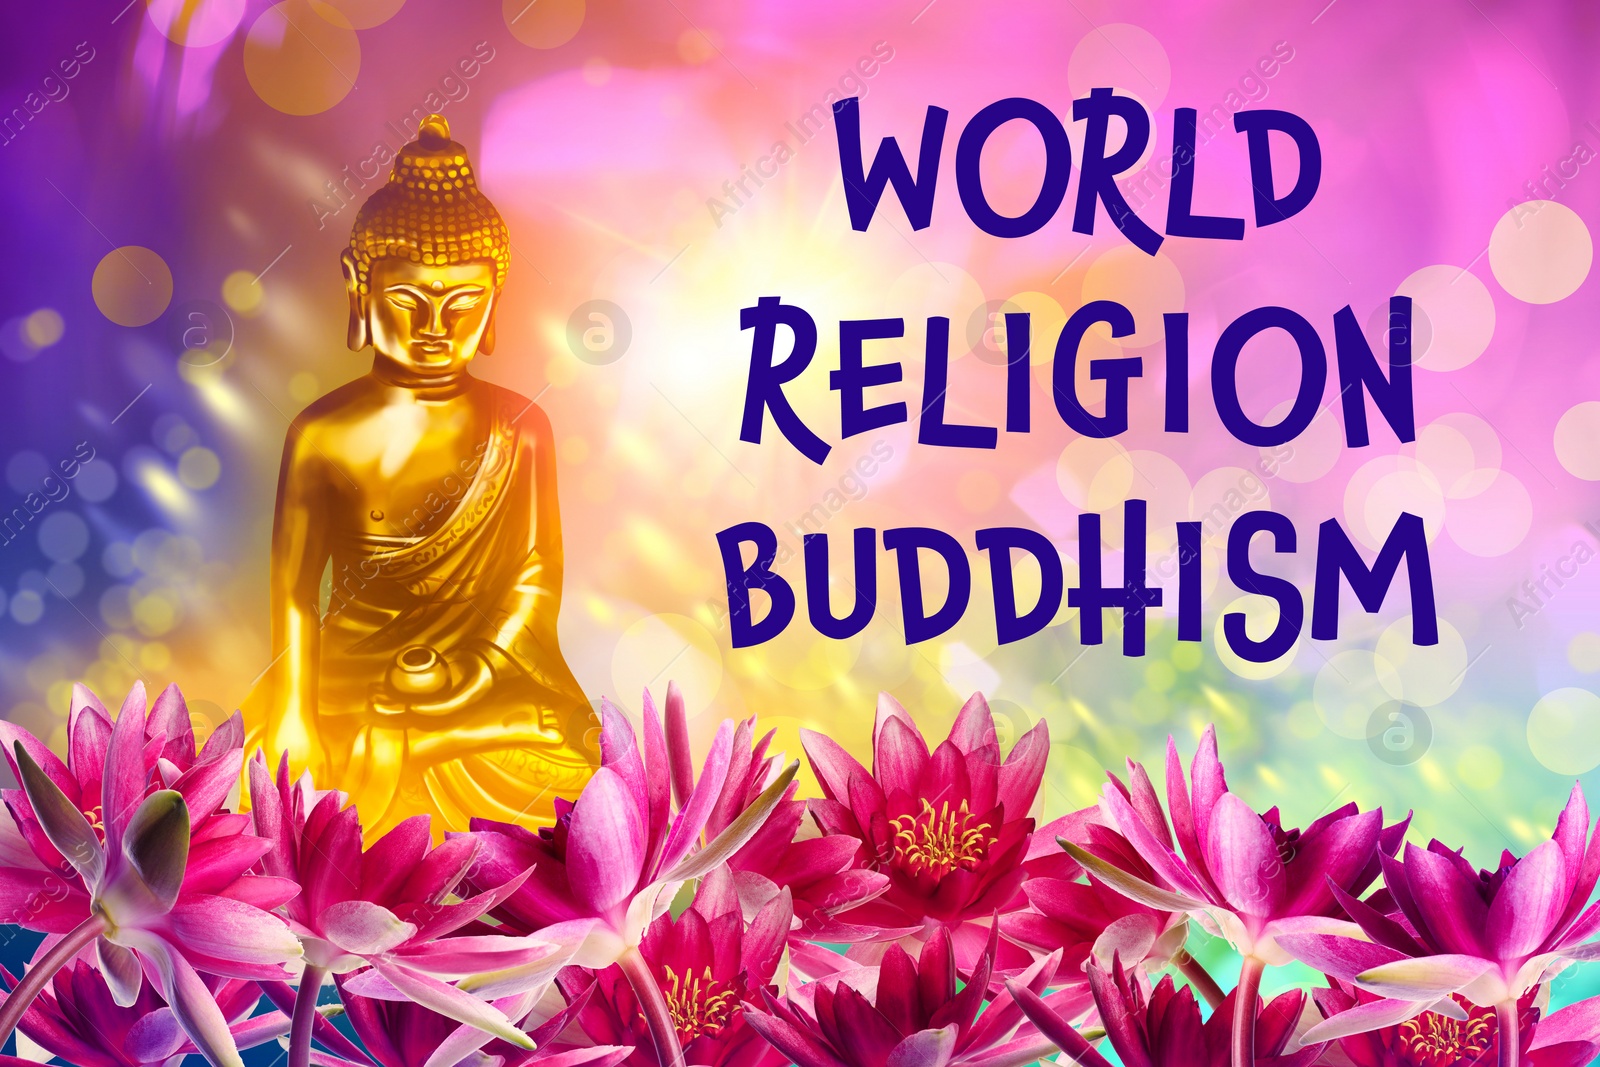 Image of Buddha figure among lotus flowers and text World Religion Buddhism on bright background